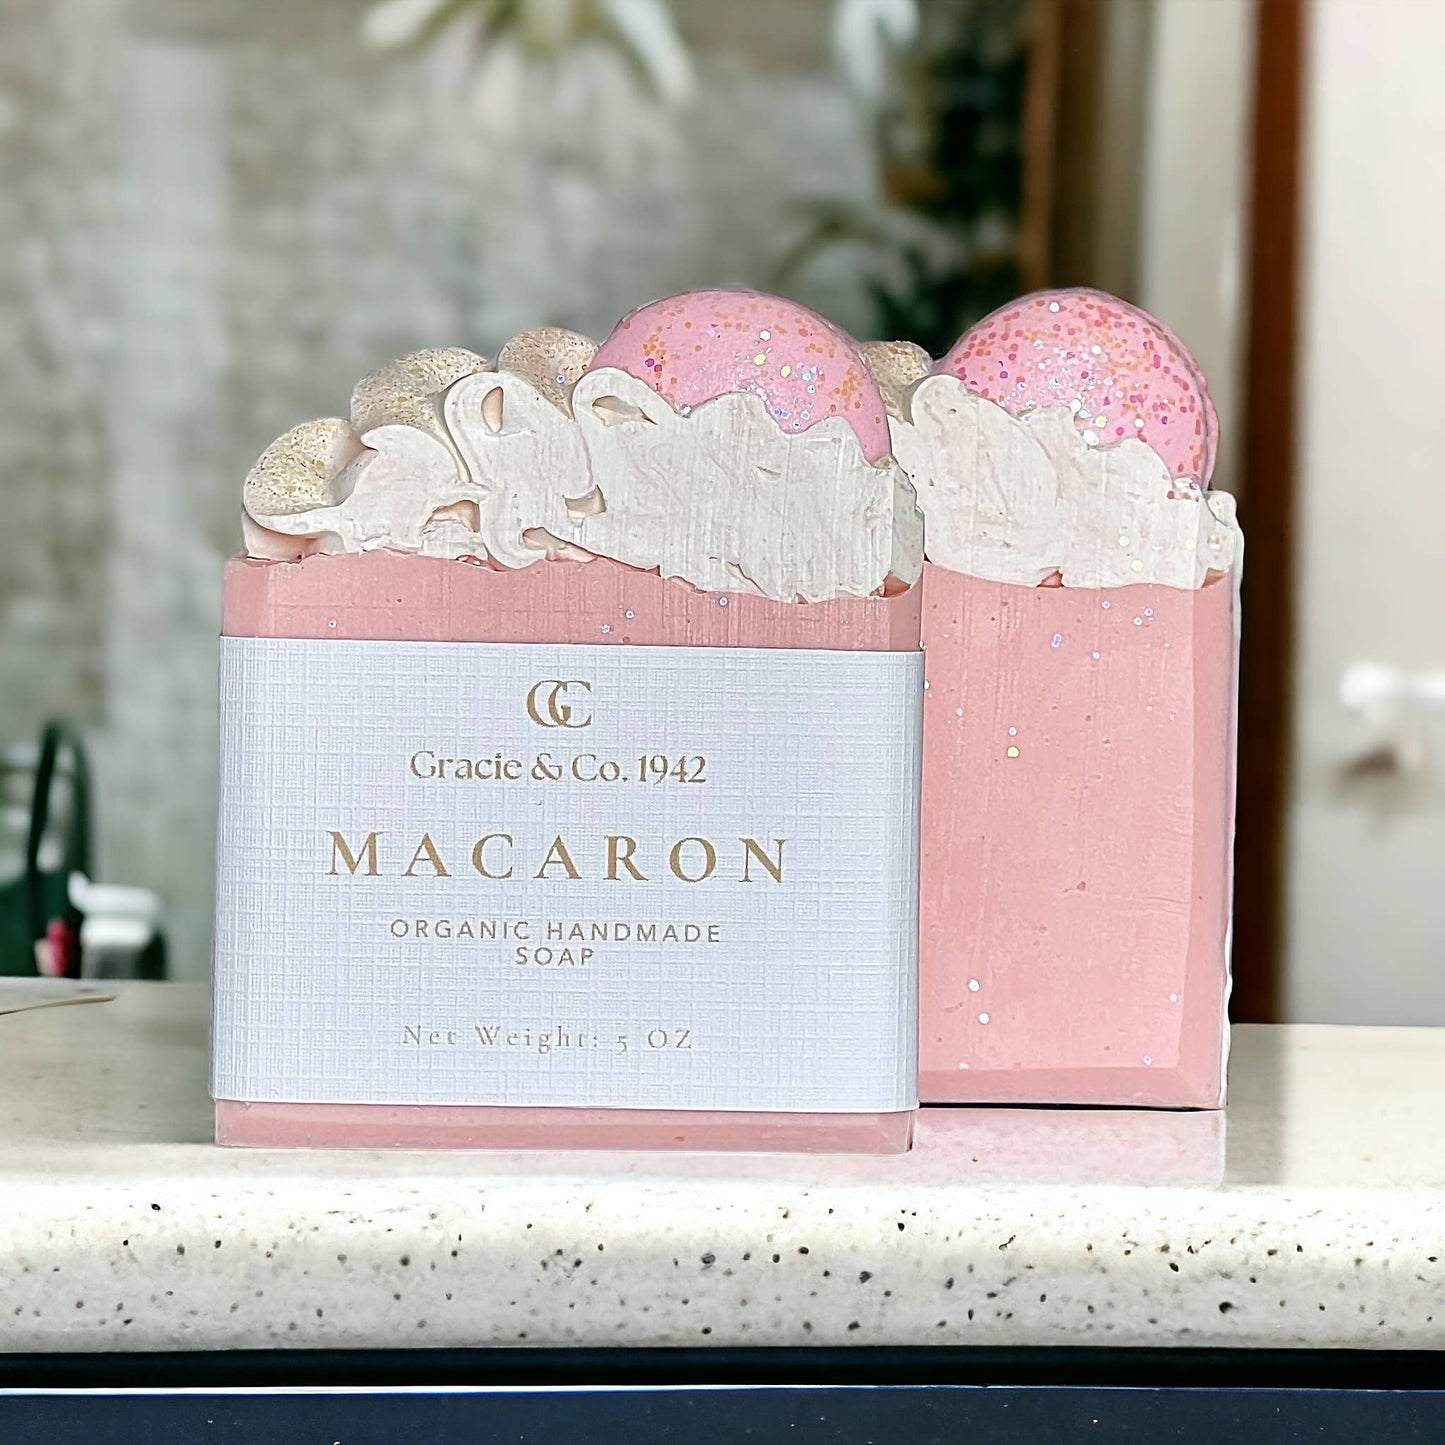 Macaron Organic Handmade Shea Butter Soap